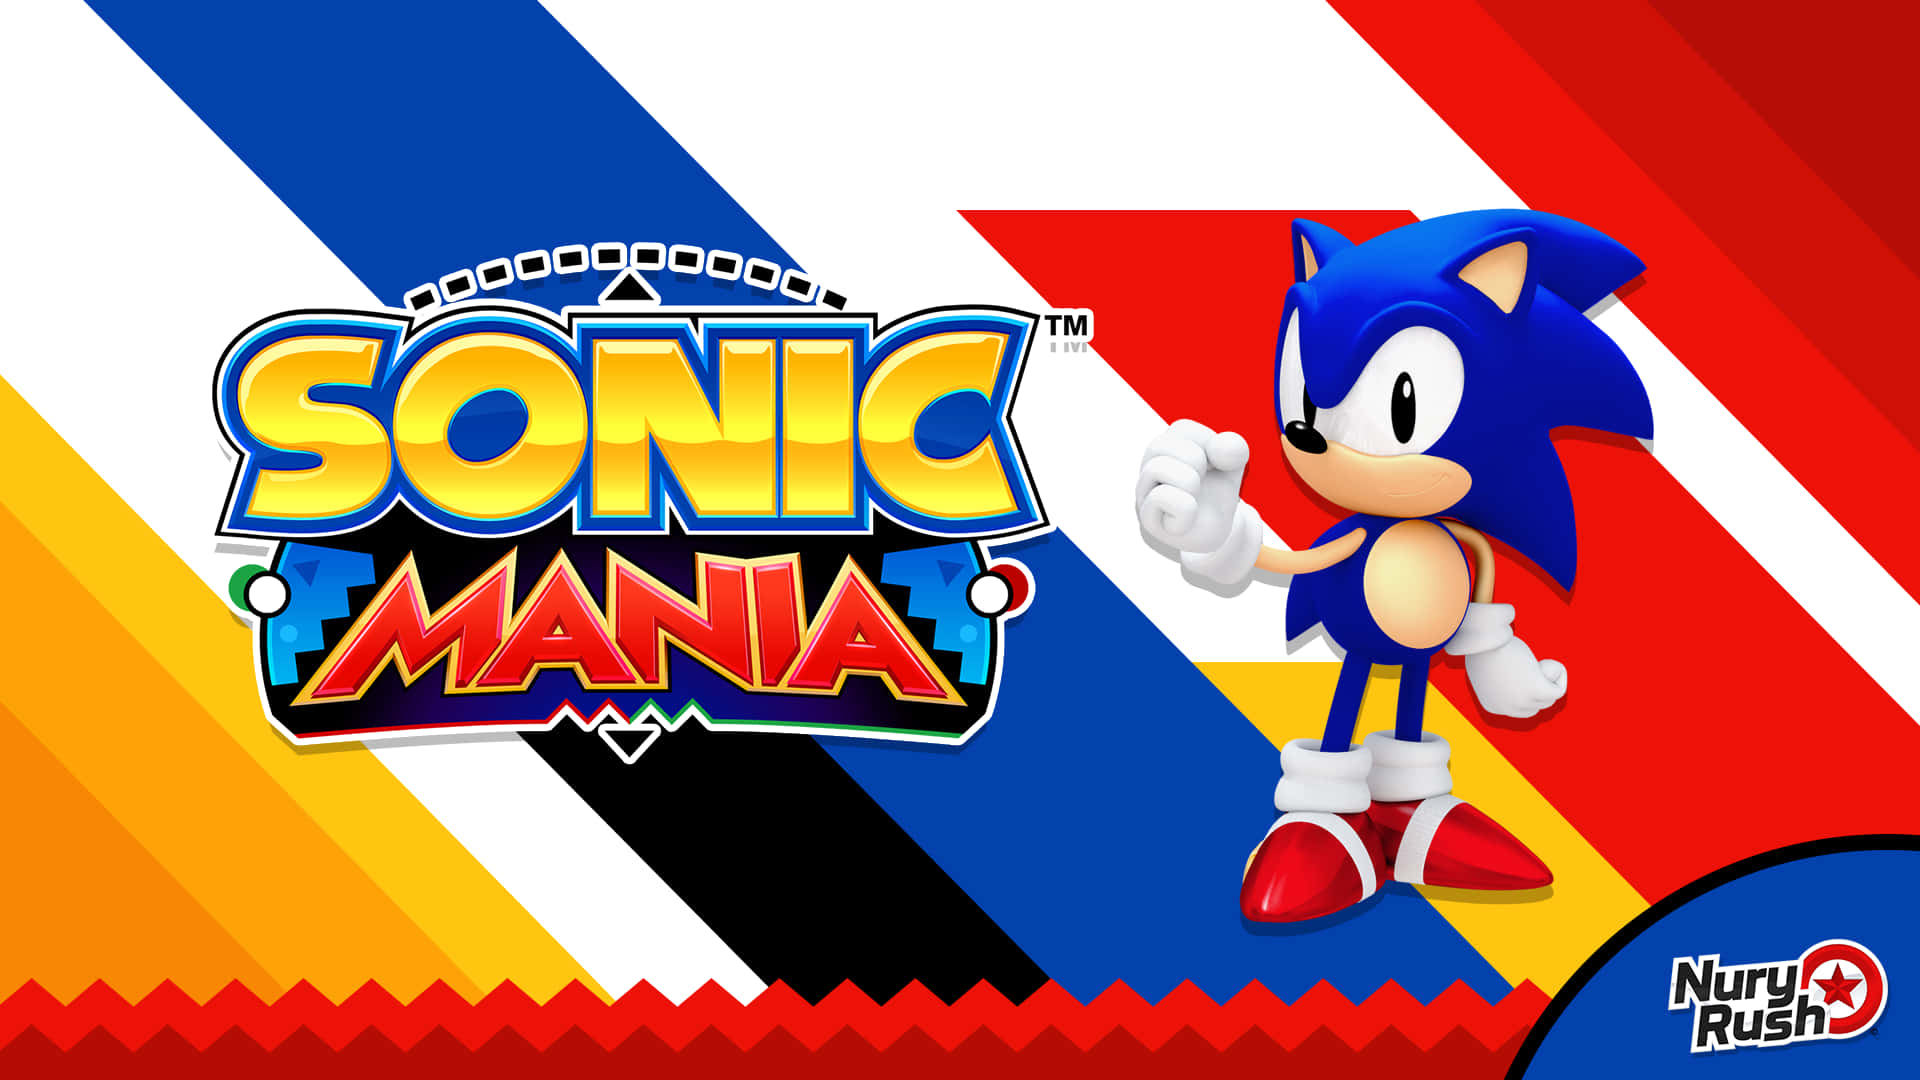 Race Ahead With Sonic Mania